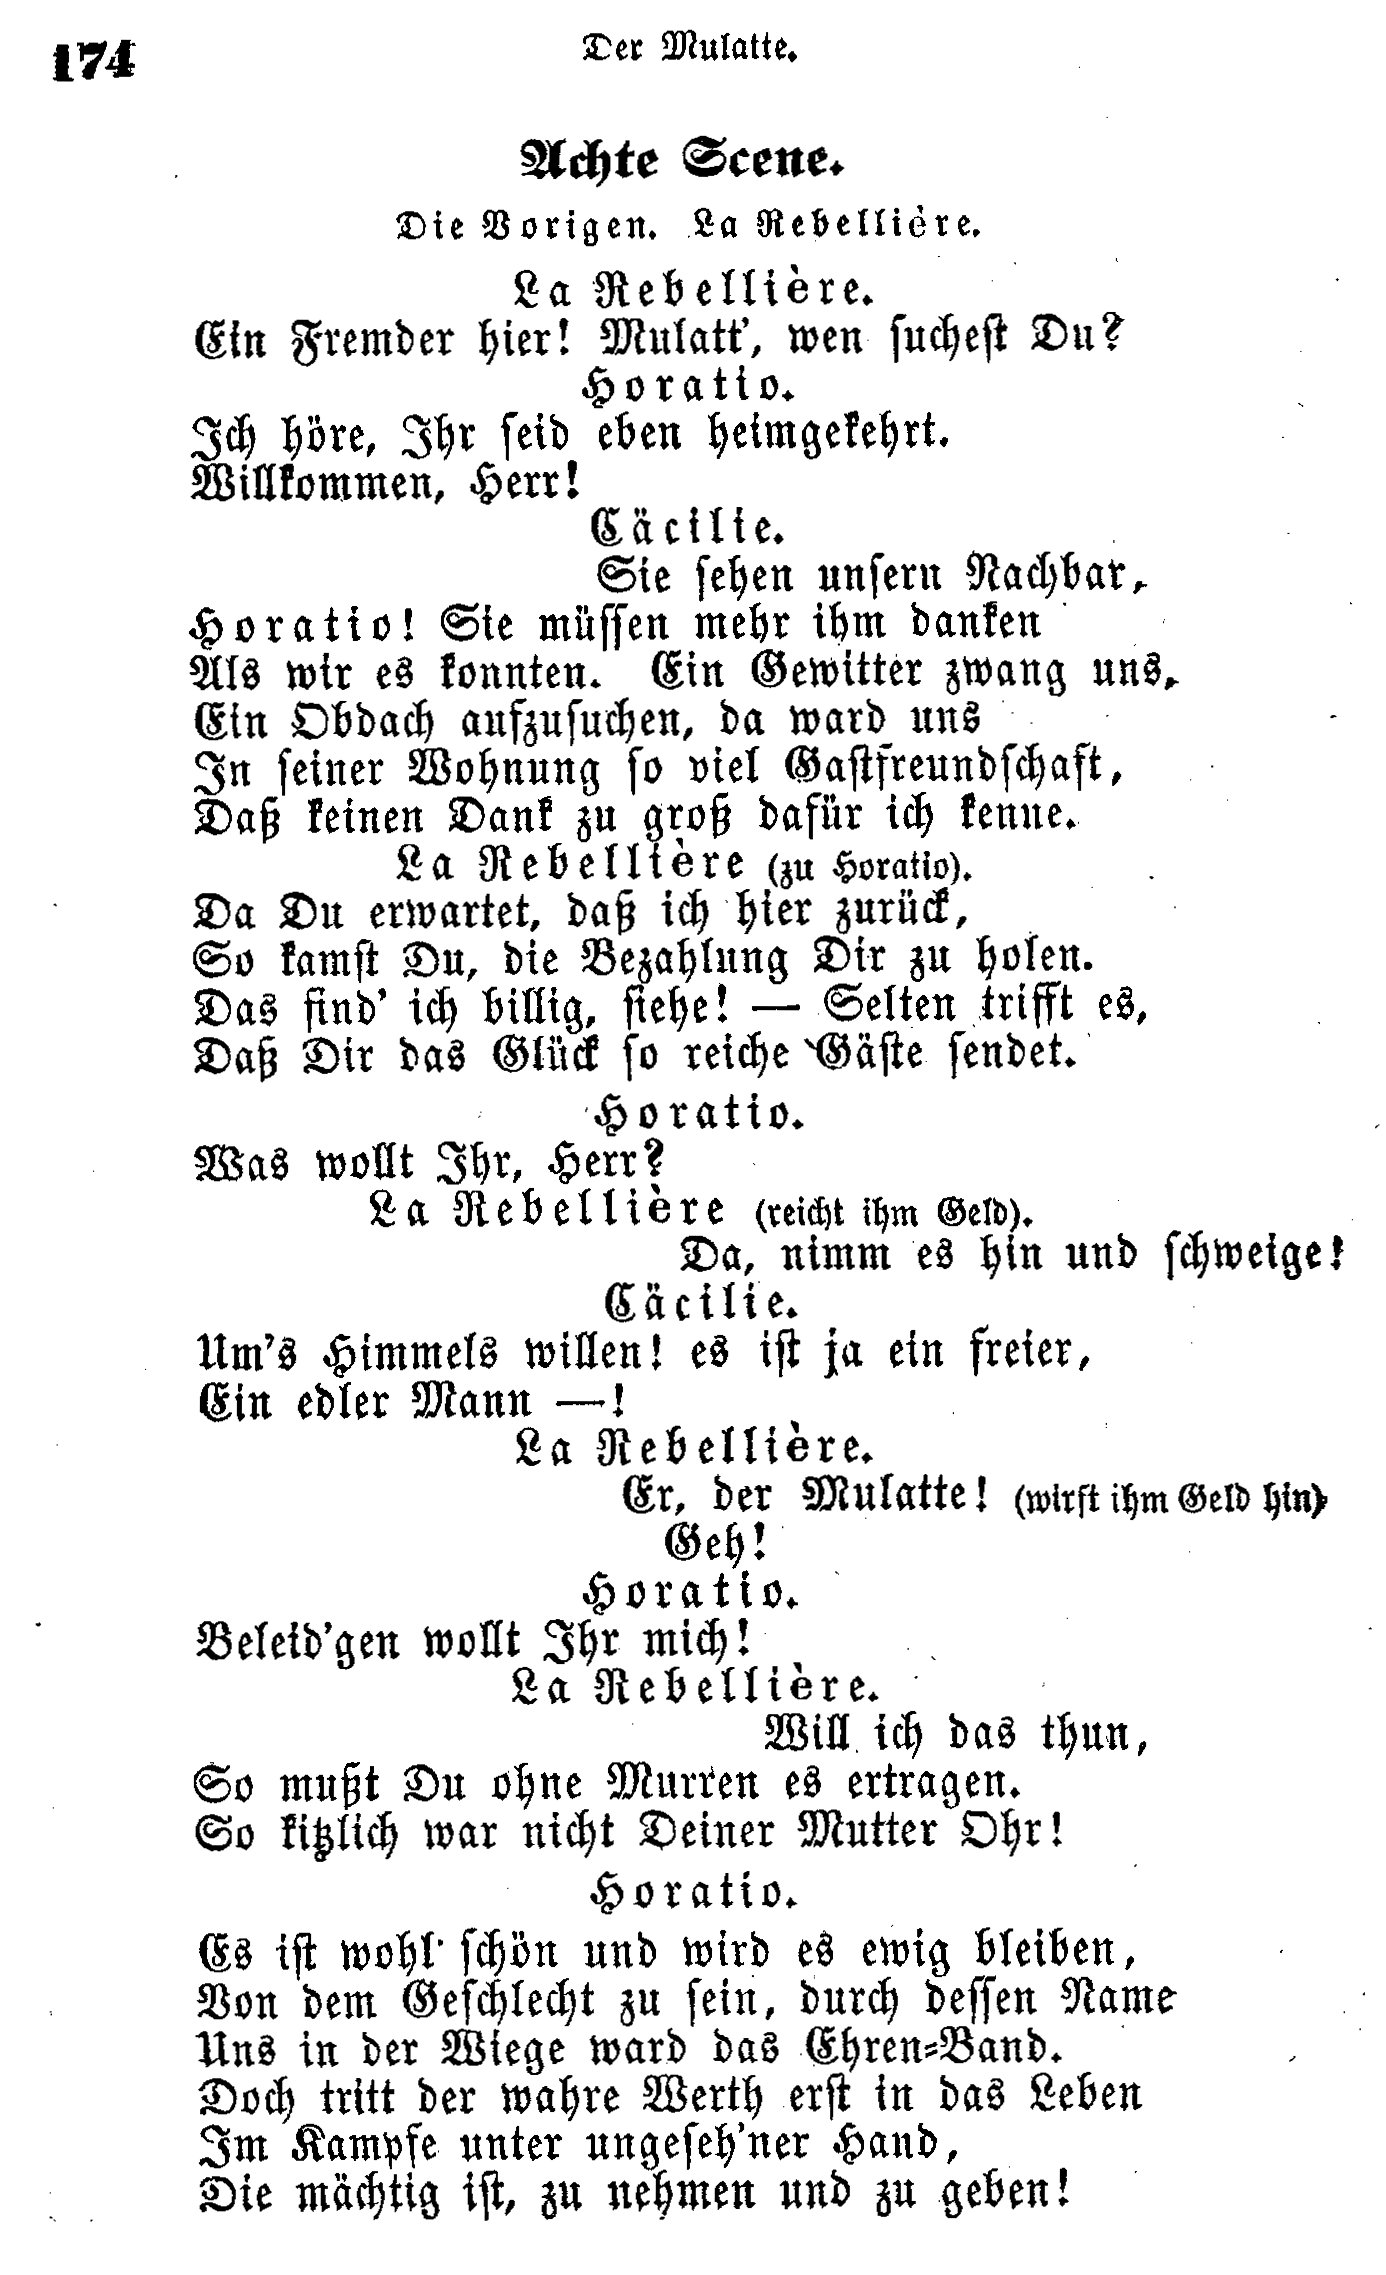 H.C. Andersen: Der Mulatte side  174